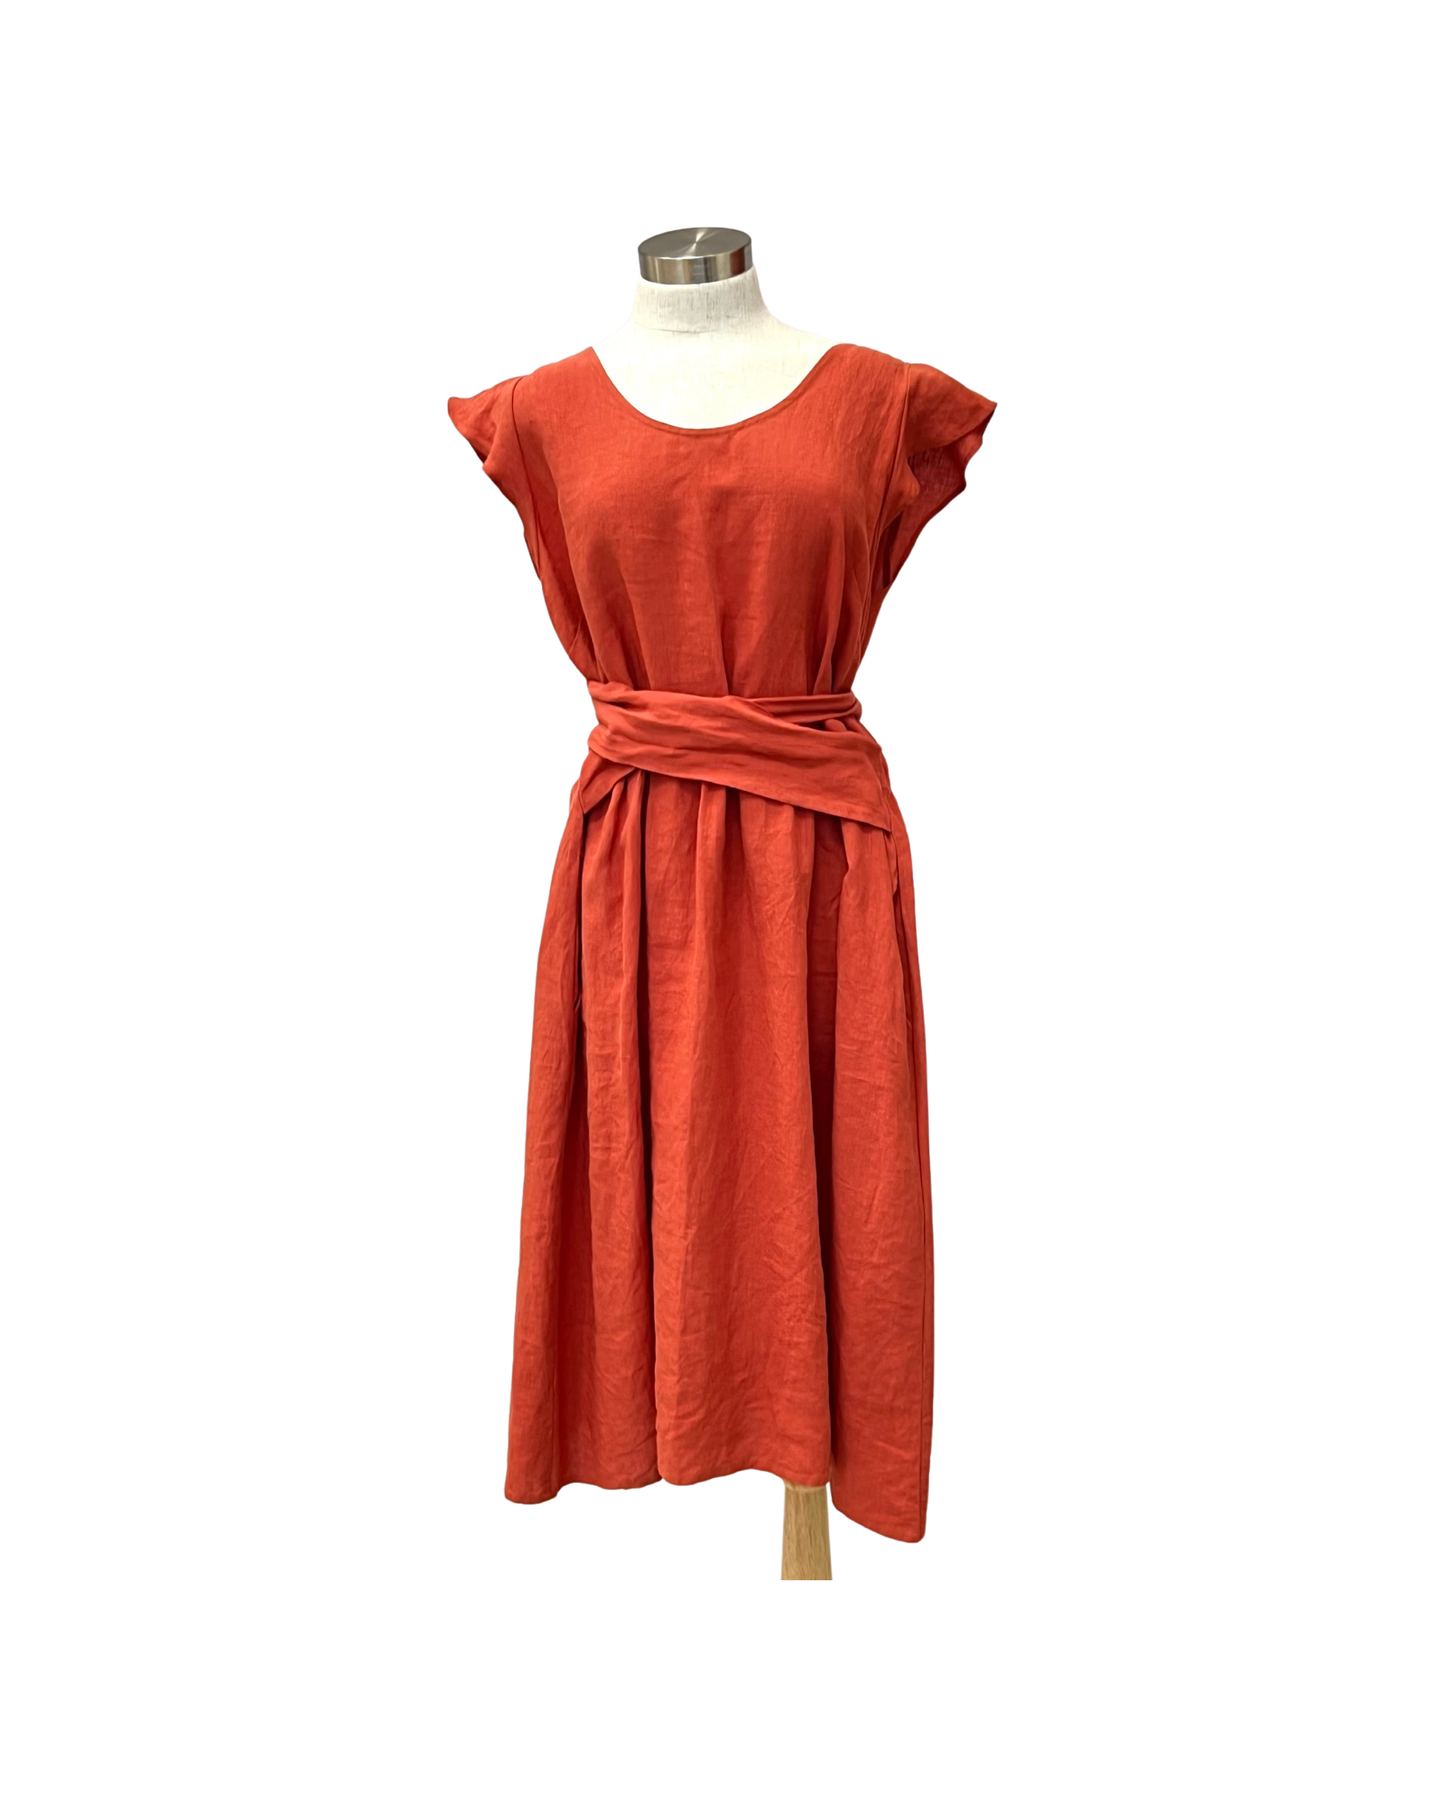 "Mollie" Dress - Apricot Linen